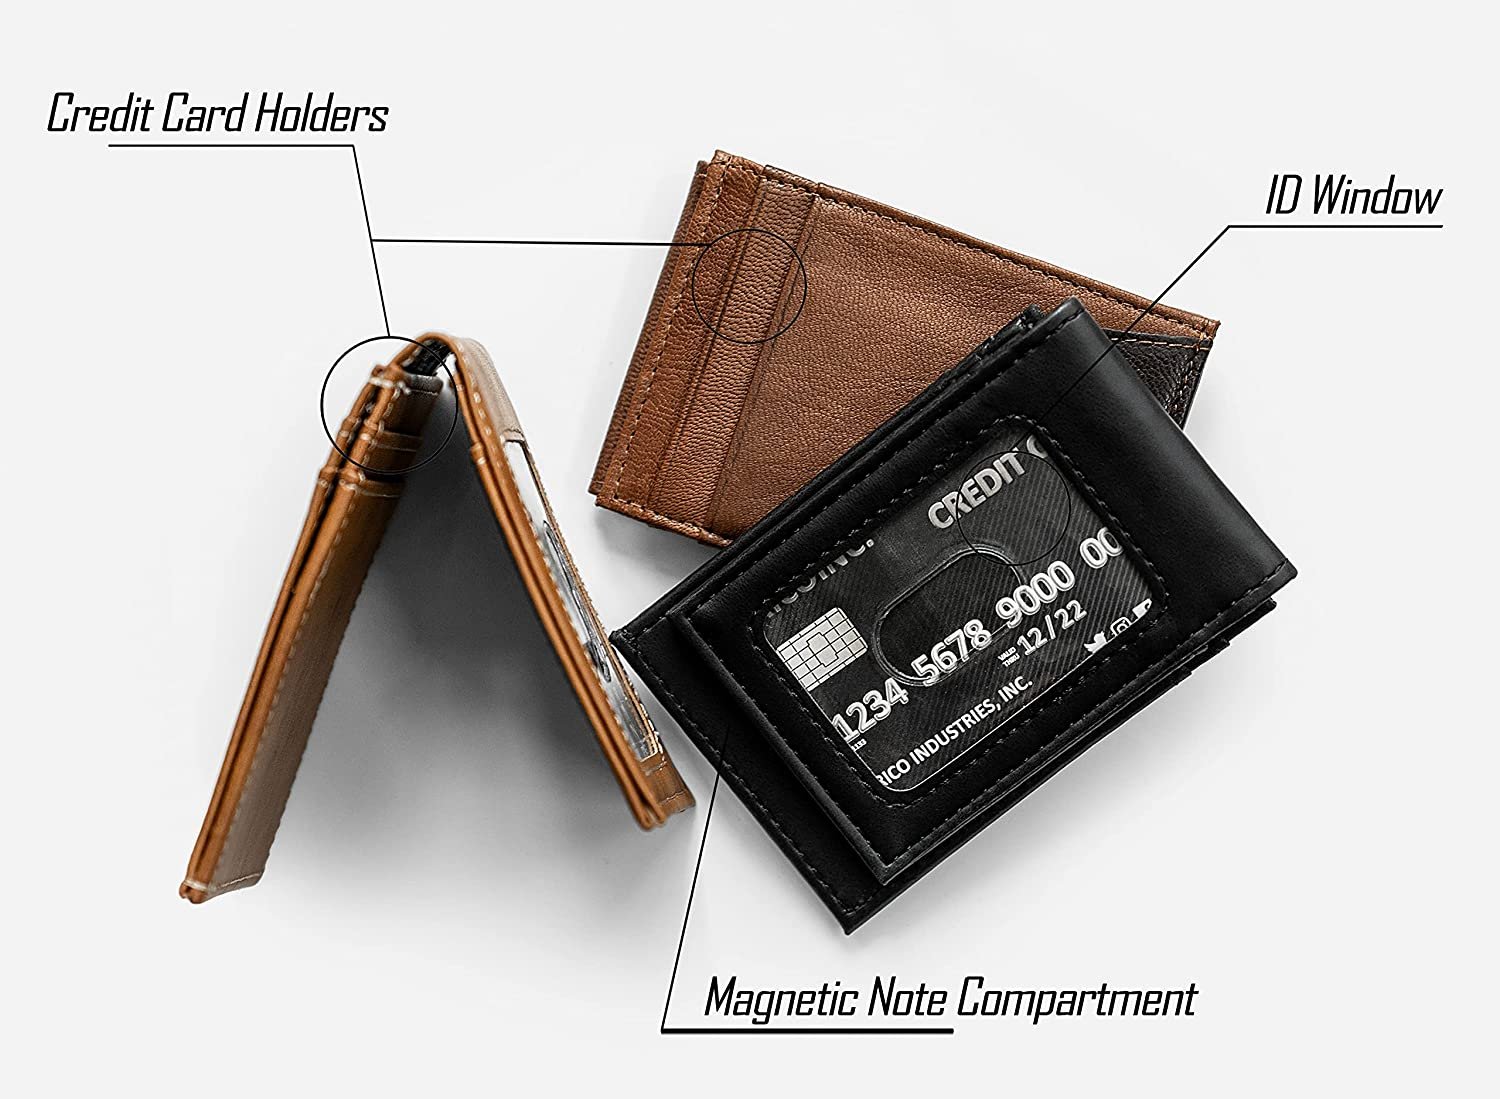 Ottawa Senators Premium Brown Leather Wallet, Front Pocket Magnetic Money Clip, Laser Engraved, Vegan